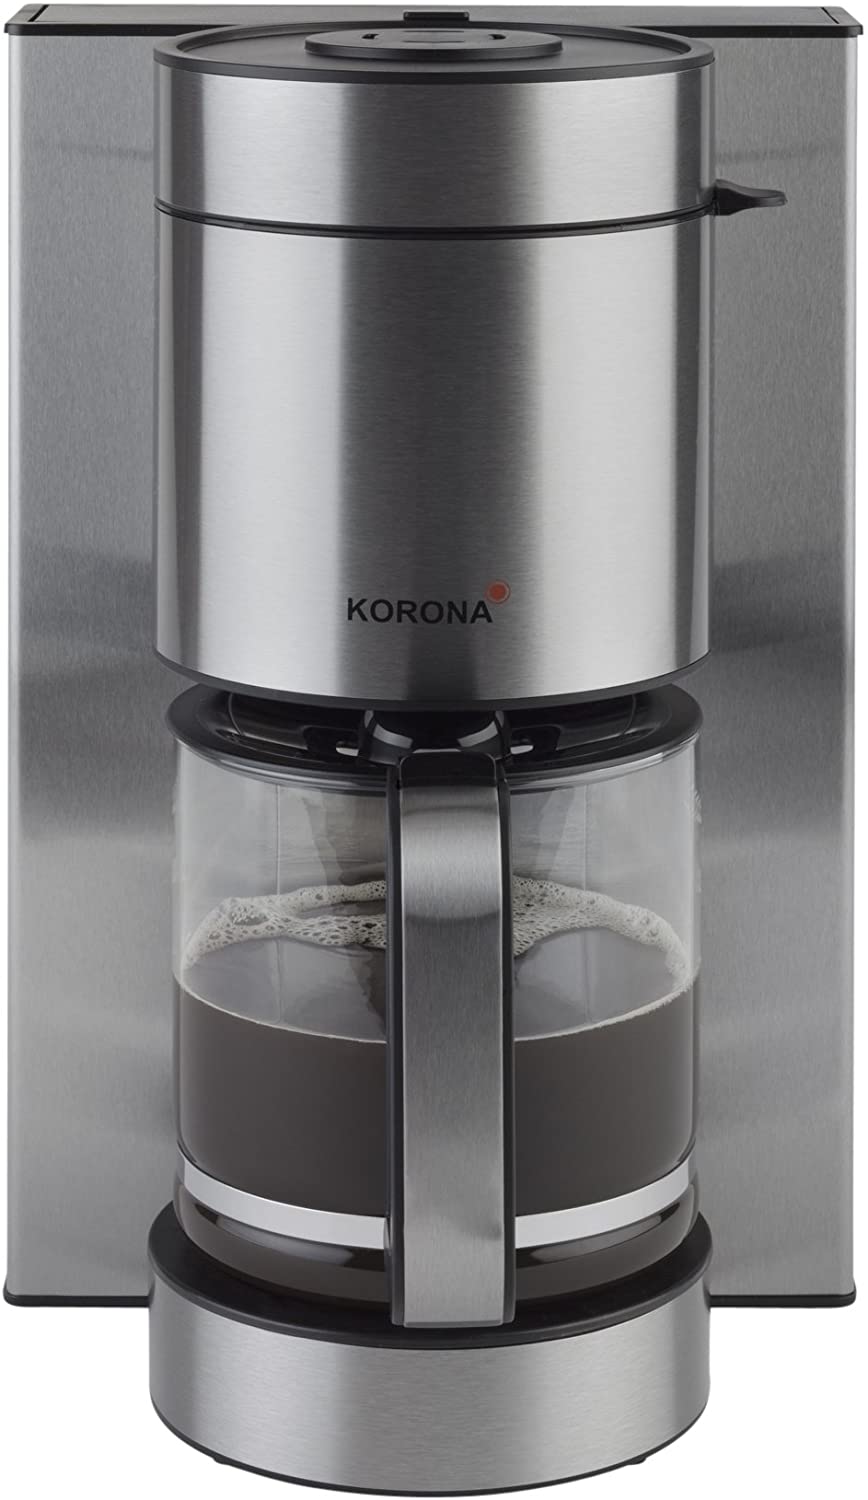 Korona 10280 Coffee Machine, Stainless Steel